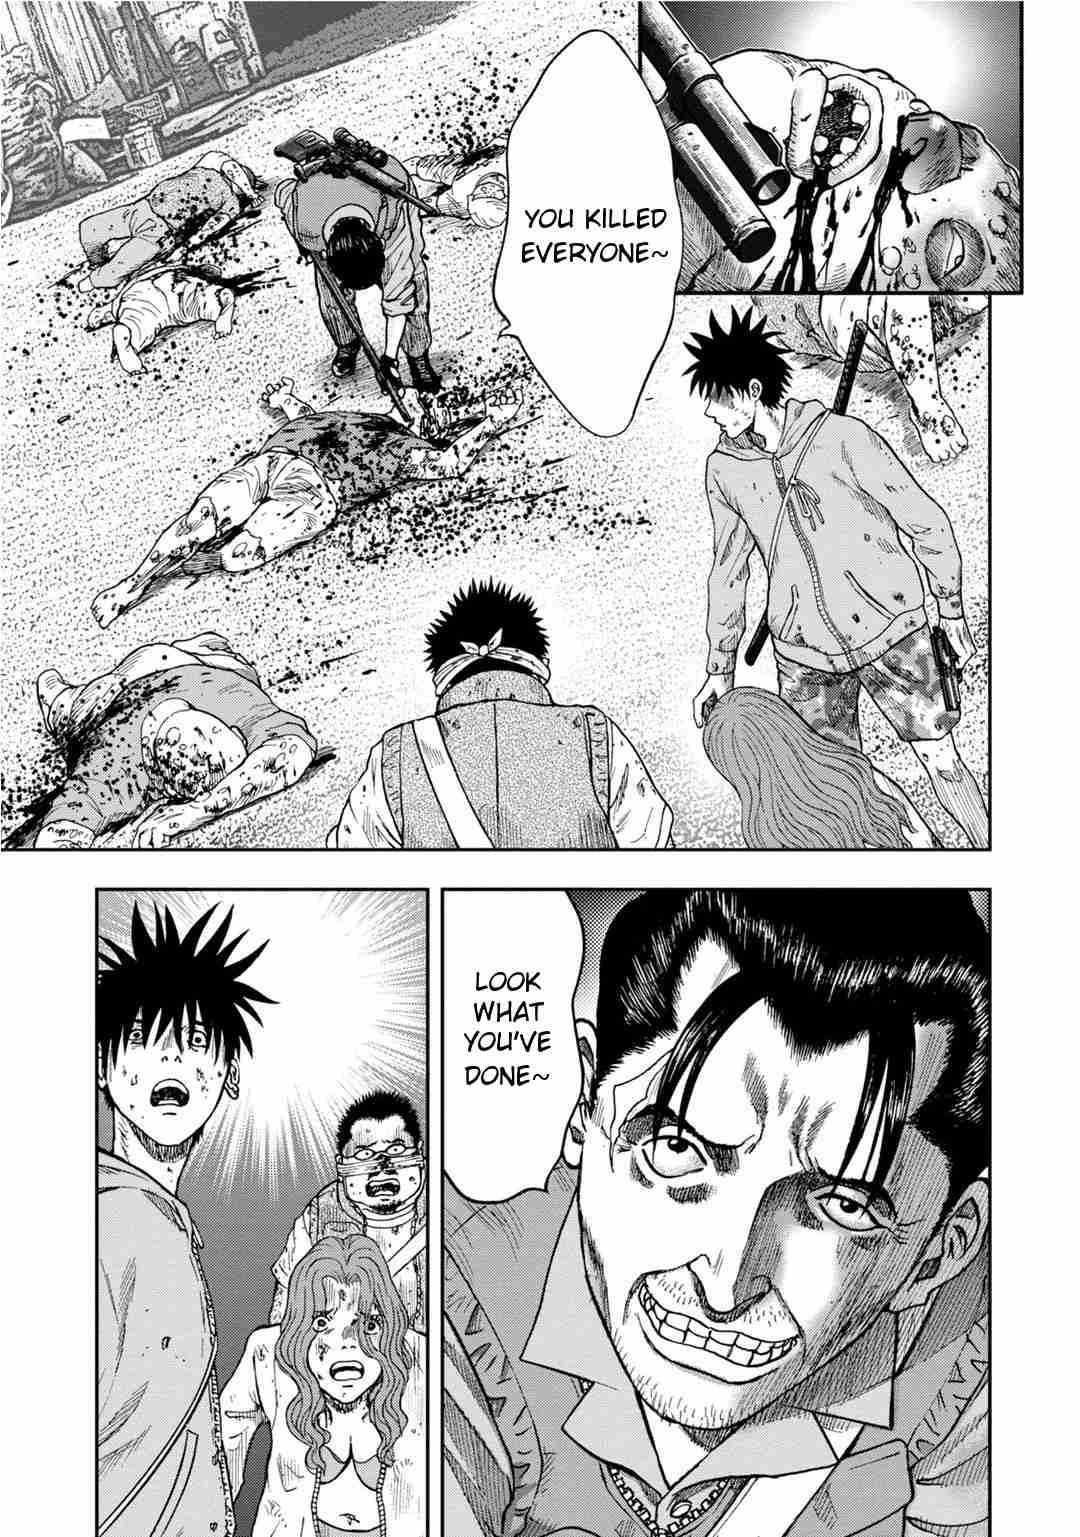 Kichikujima Vol. 2 Ch. 10 Massacre